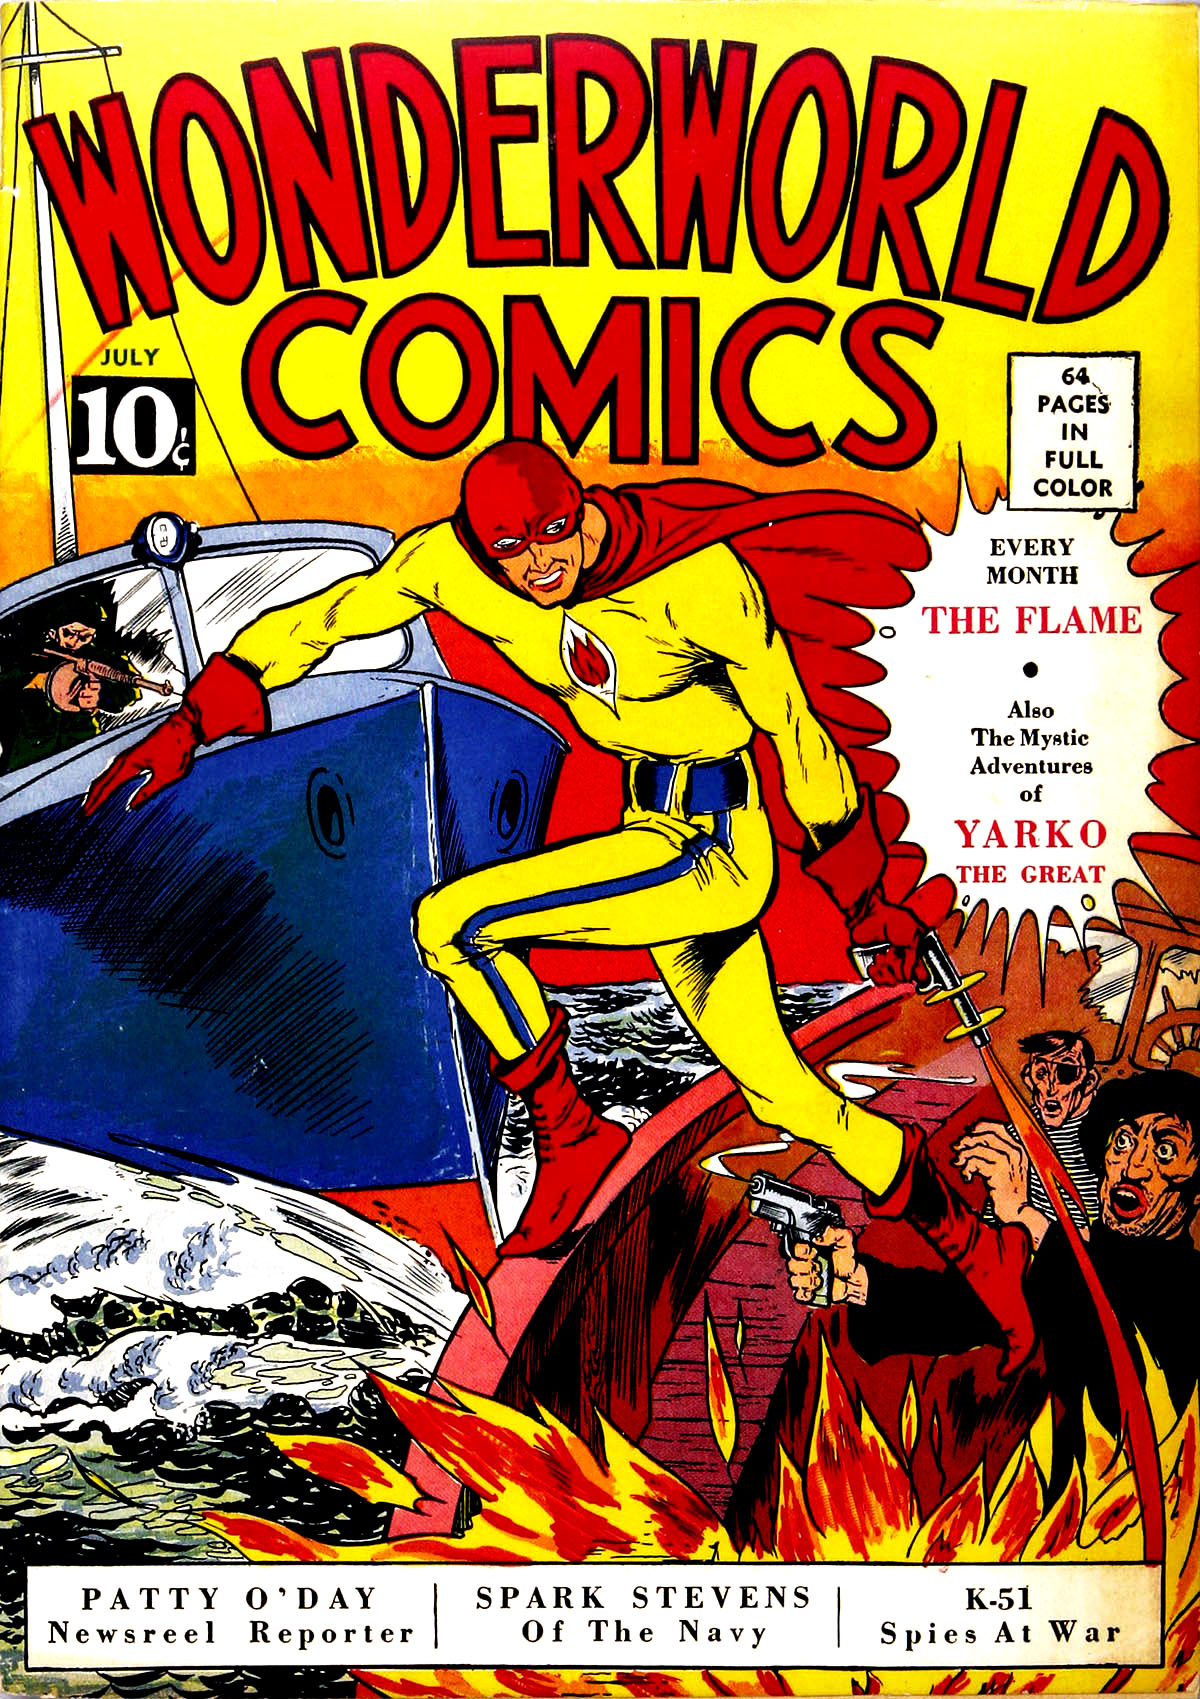 Photo: Digital Comic Museum Publishing the Cover of Wonderworld Comics #3.